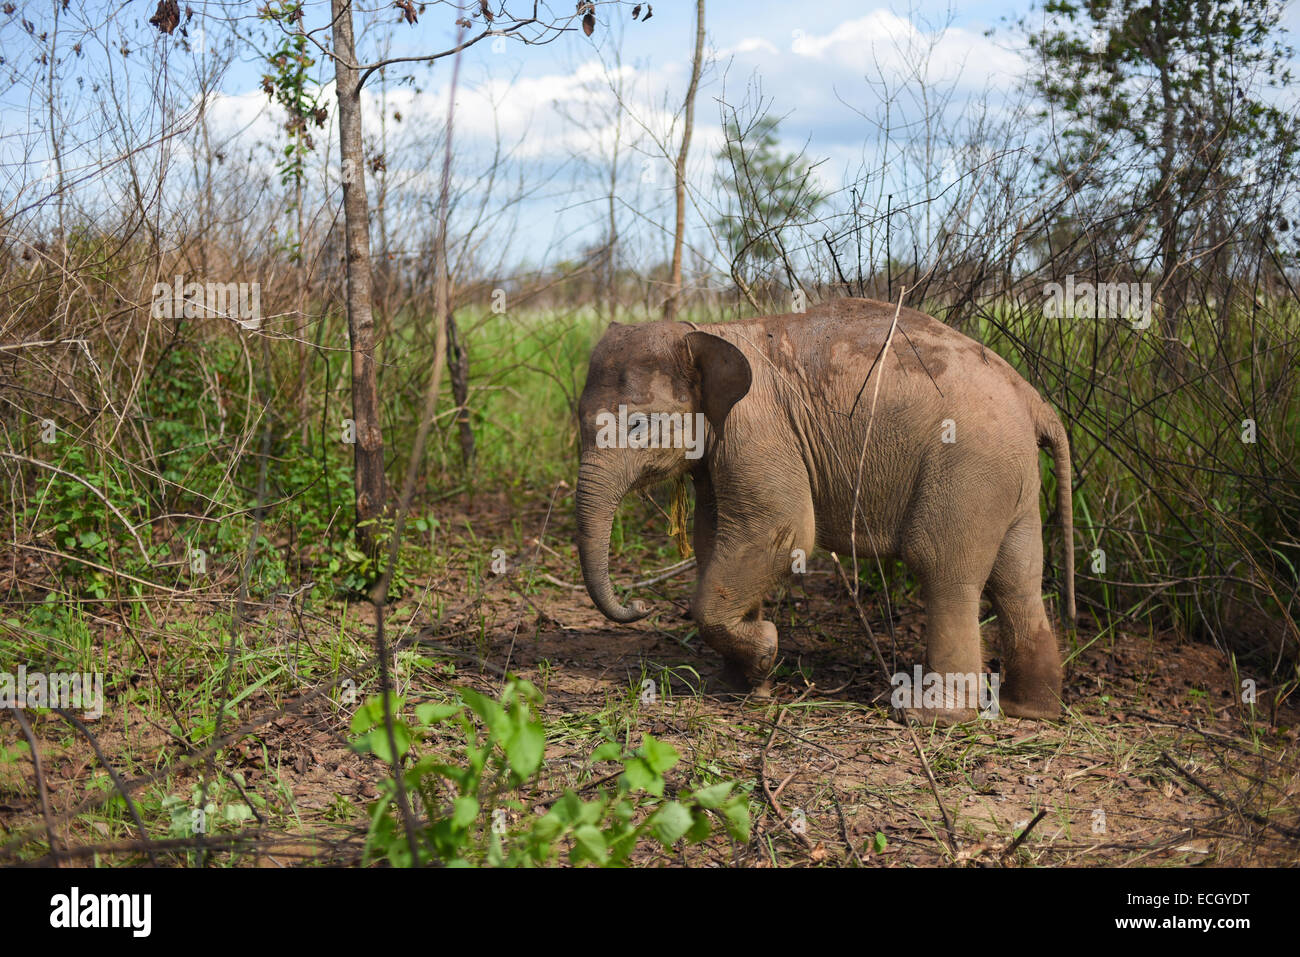 A Sumatran elephant baby in Way Kambas National Park, Indonesia. Stock Photo